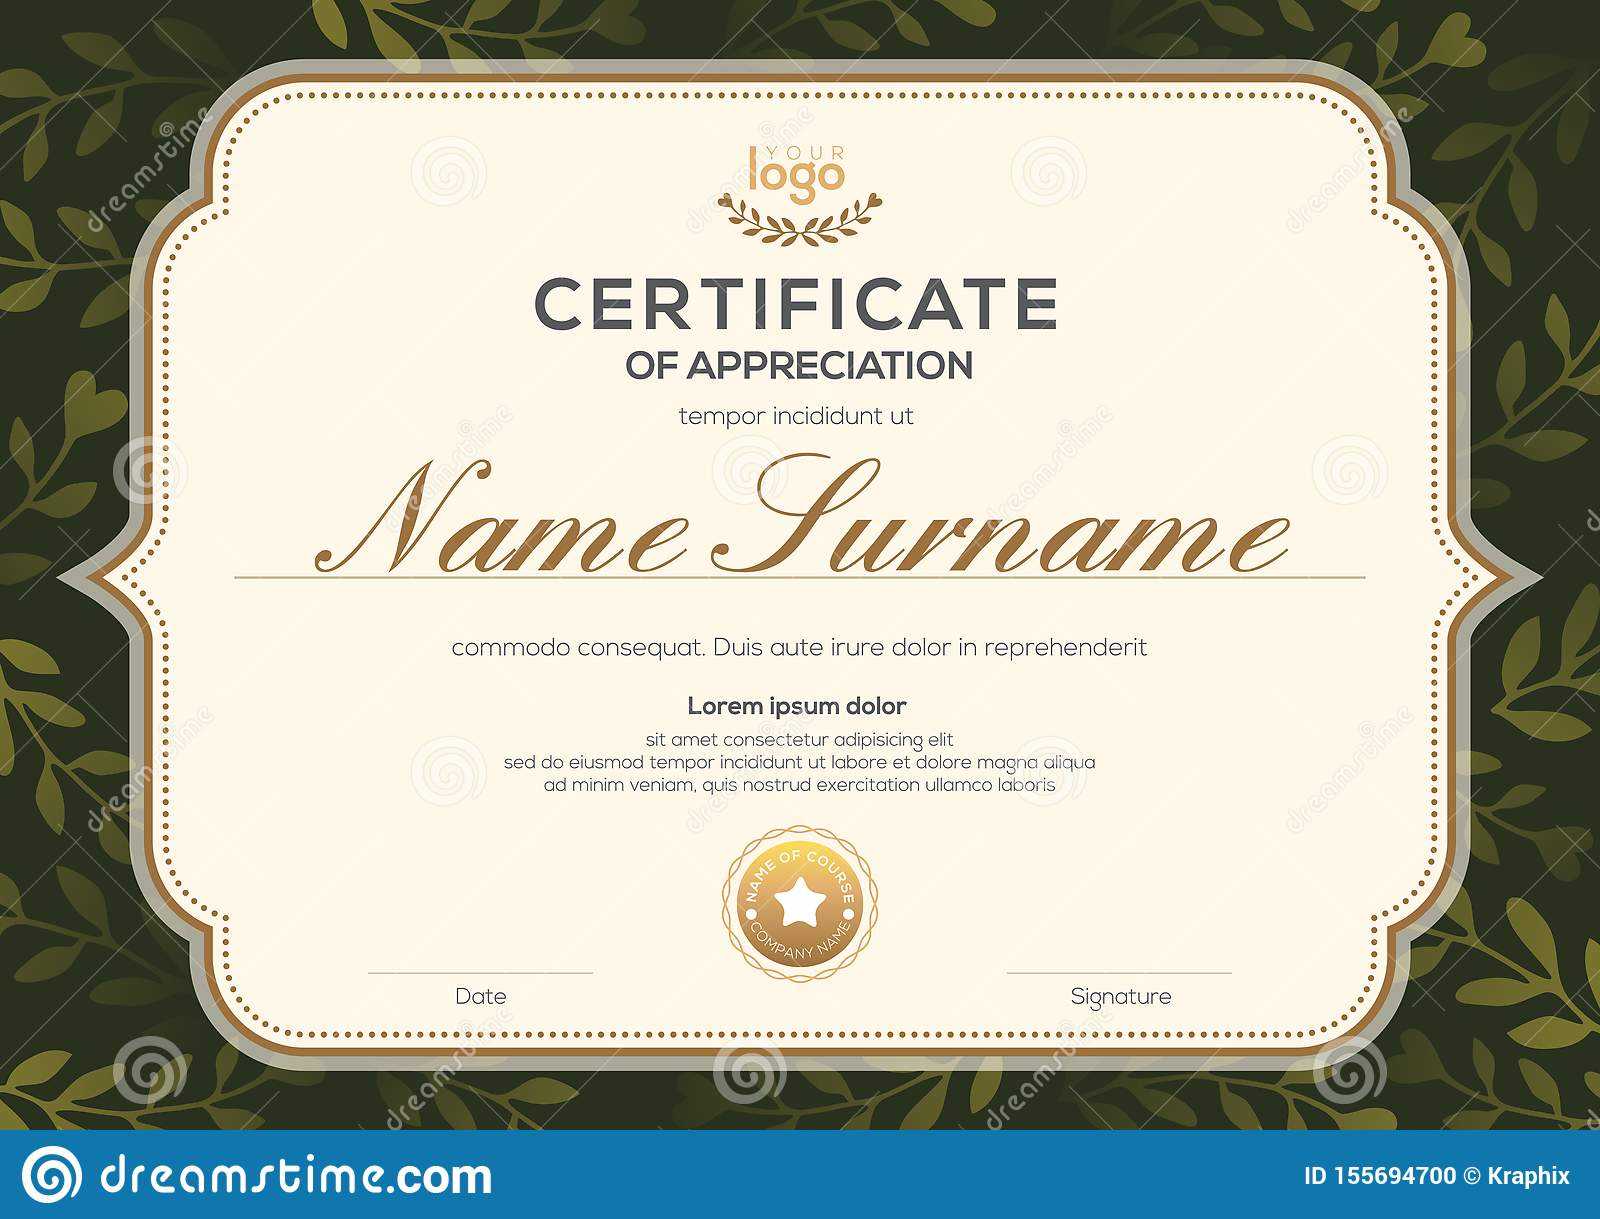 Certificate Template With Vintage Frame On Dark Green Floral Regarding Commemorative Certificate Template